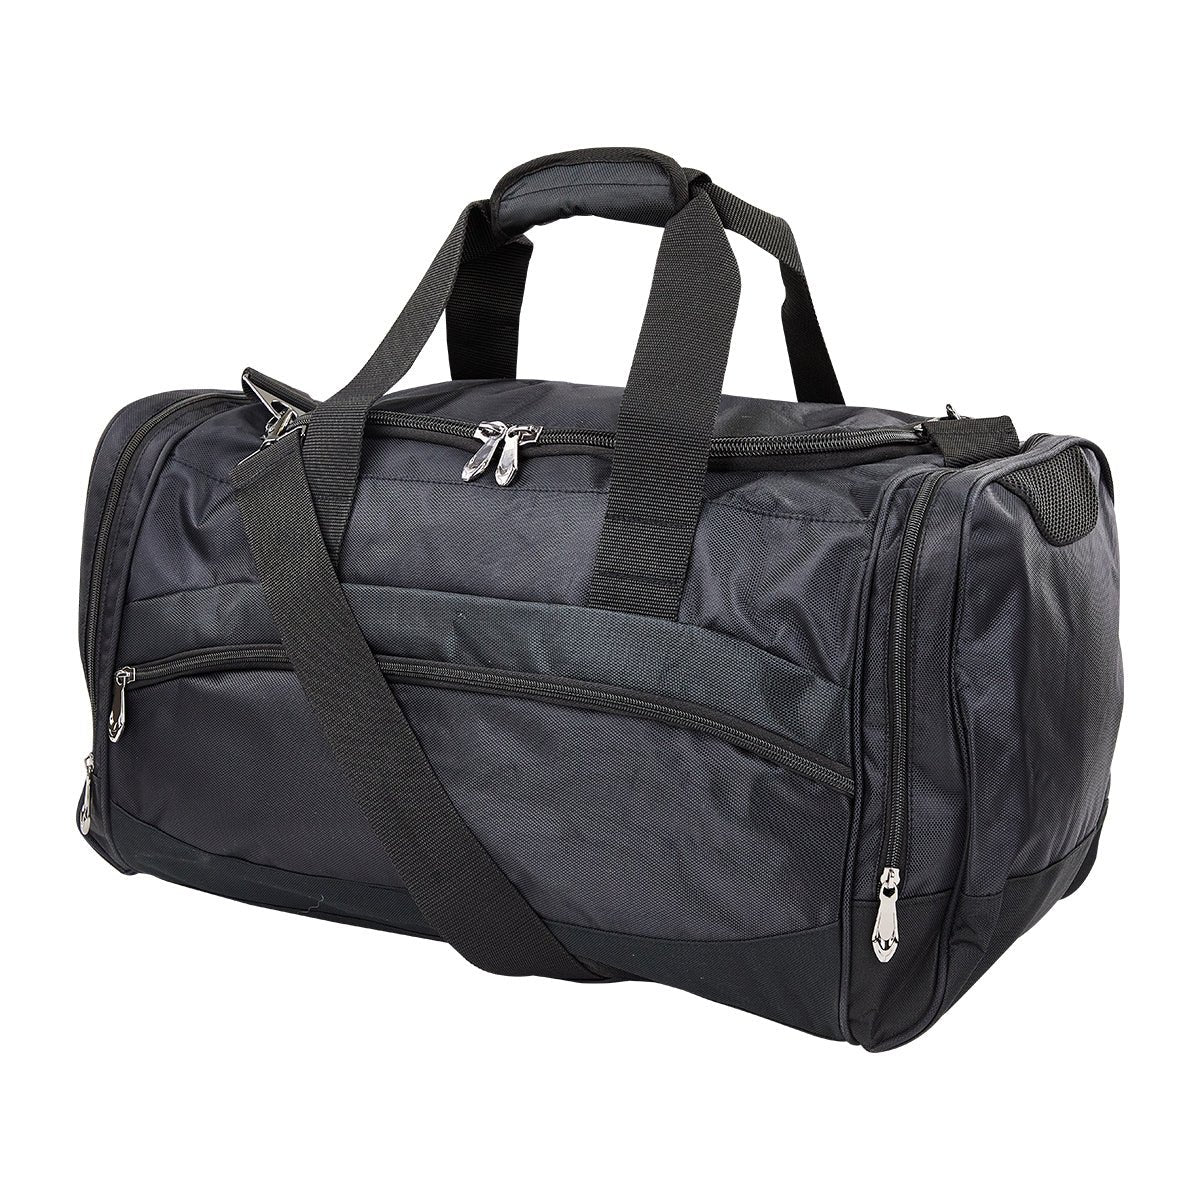 Premium Sport Bag - Large Large Black